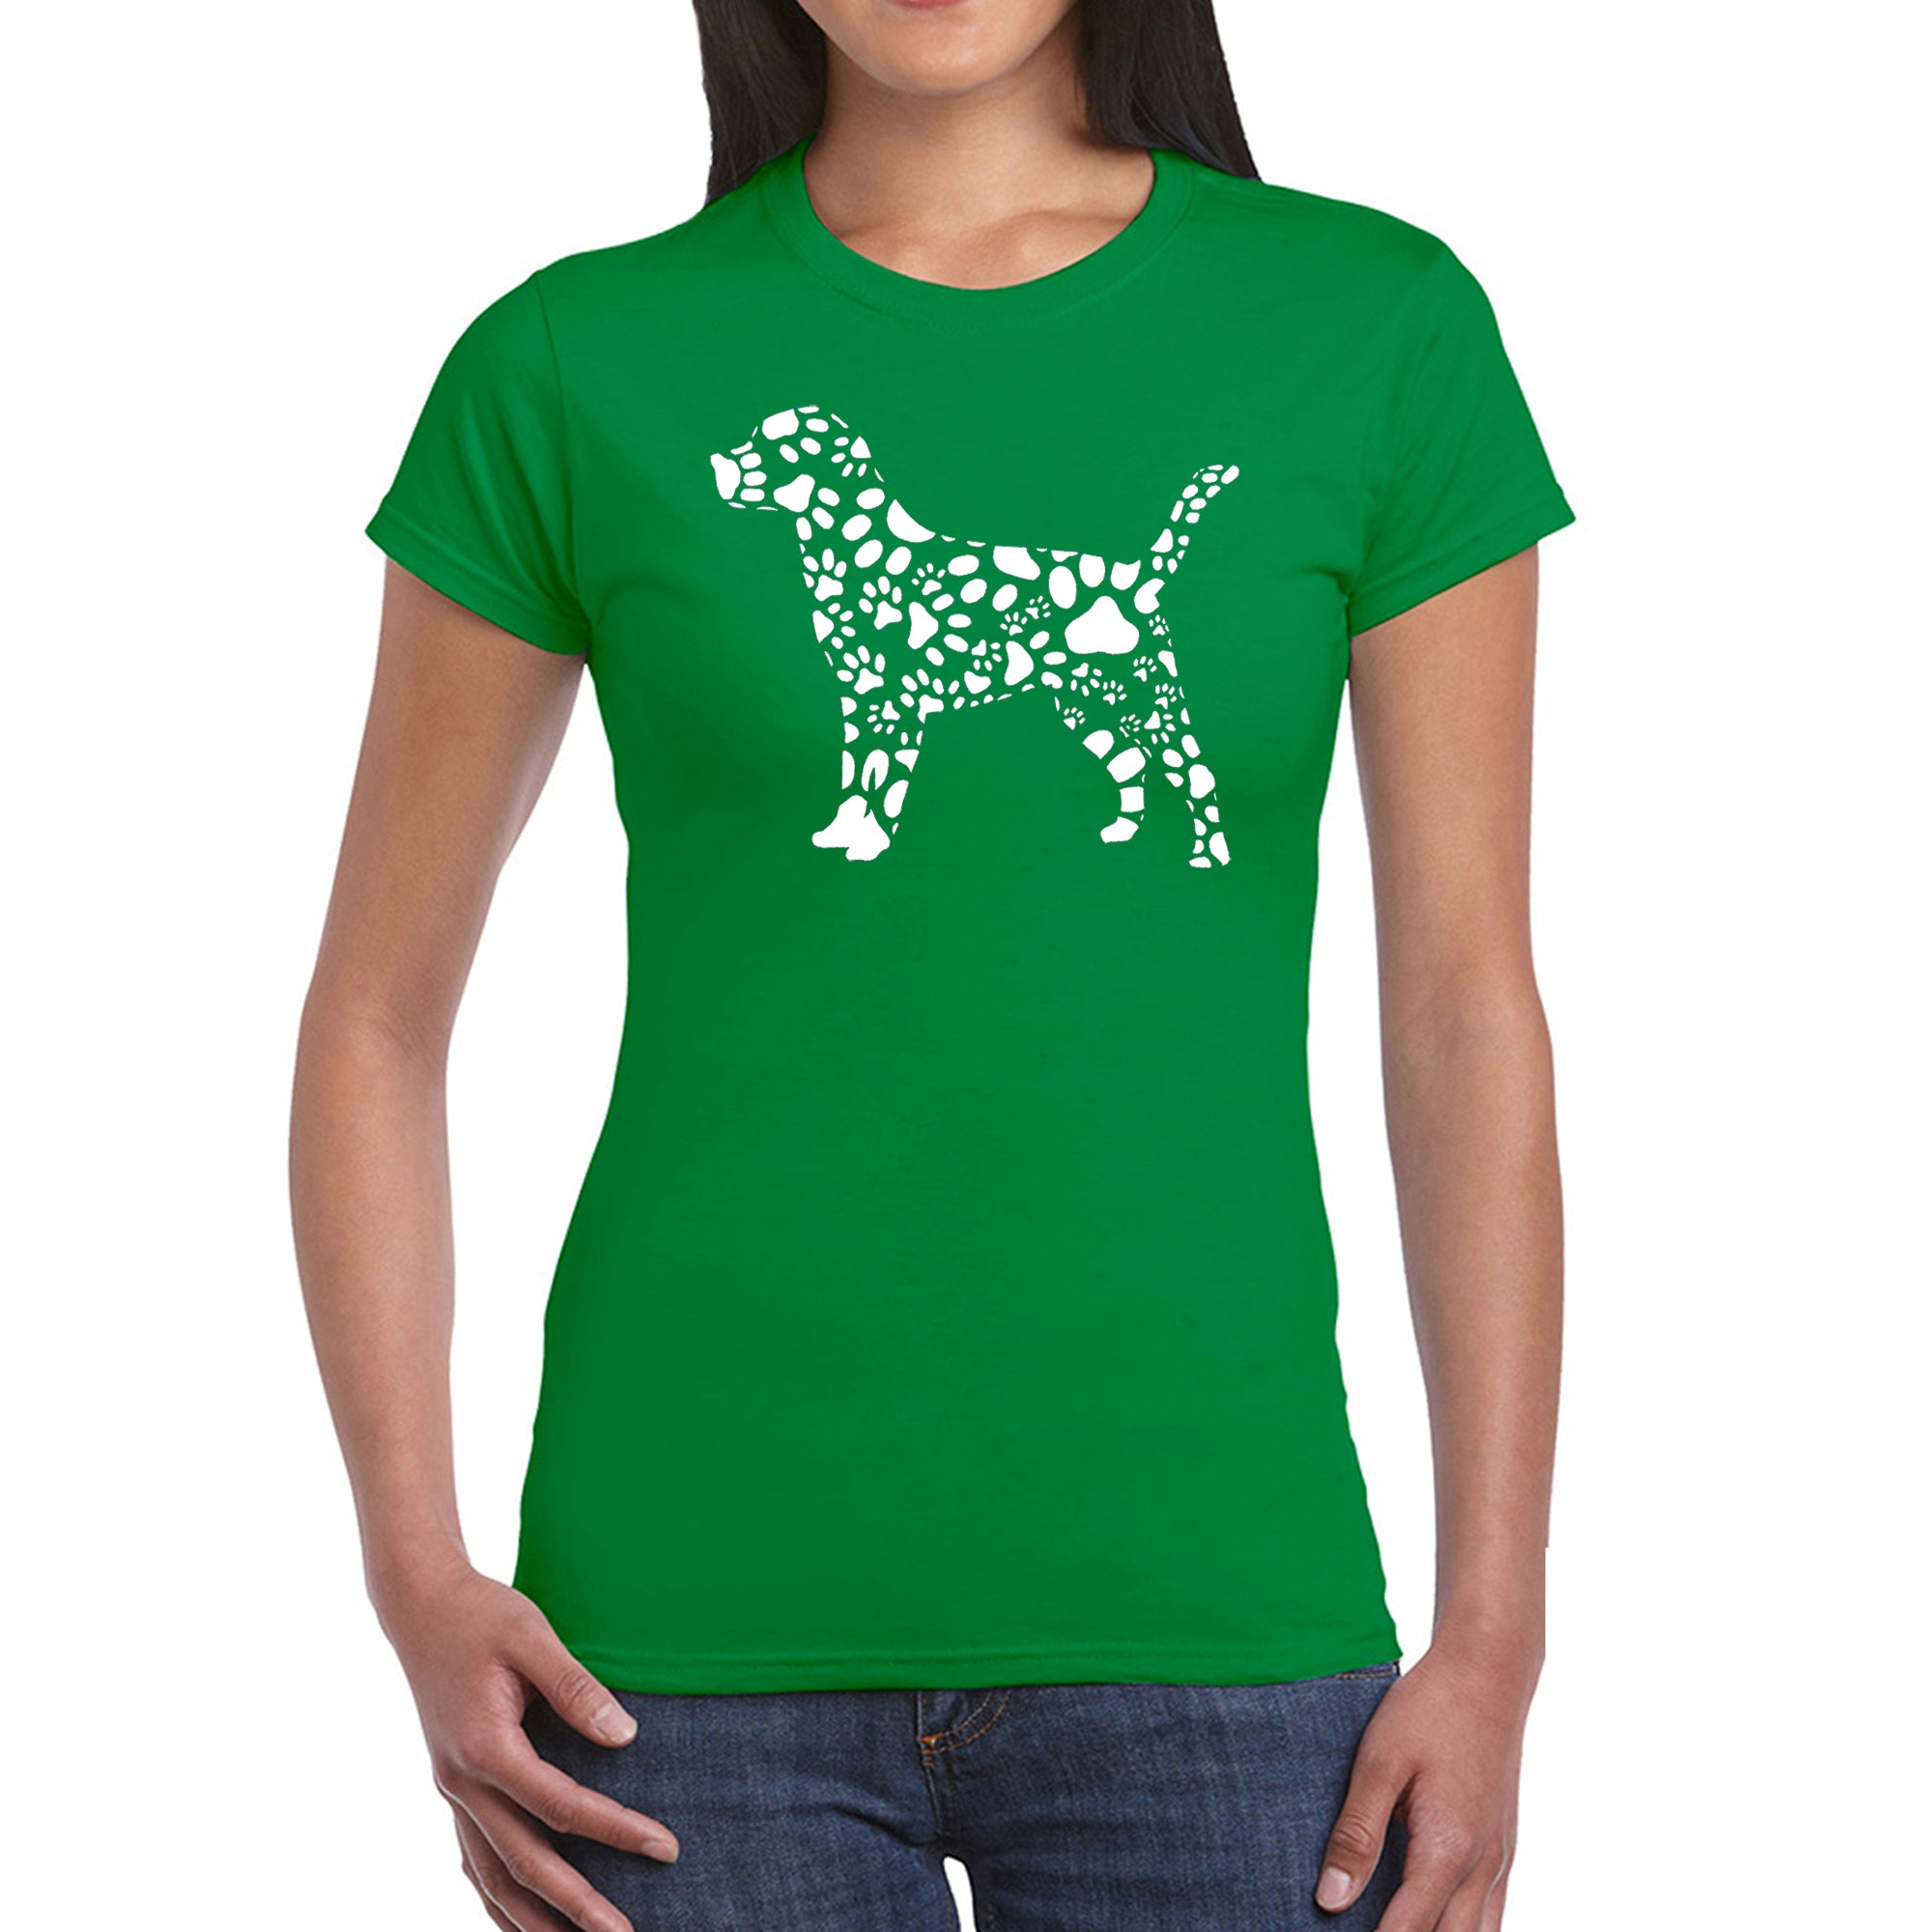 Dog Paw Prints - Women's Word Art T-Shirt - Kelly - Small